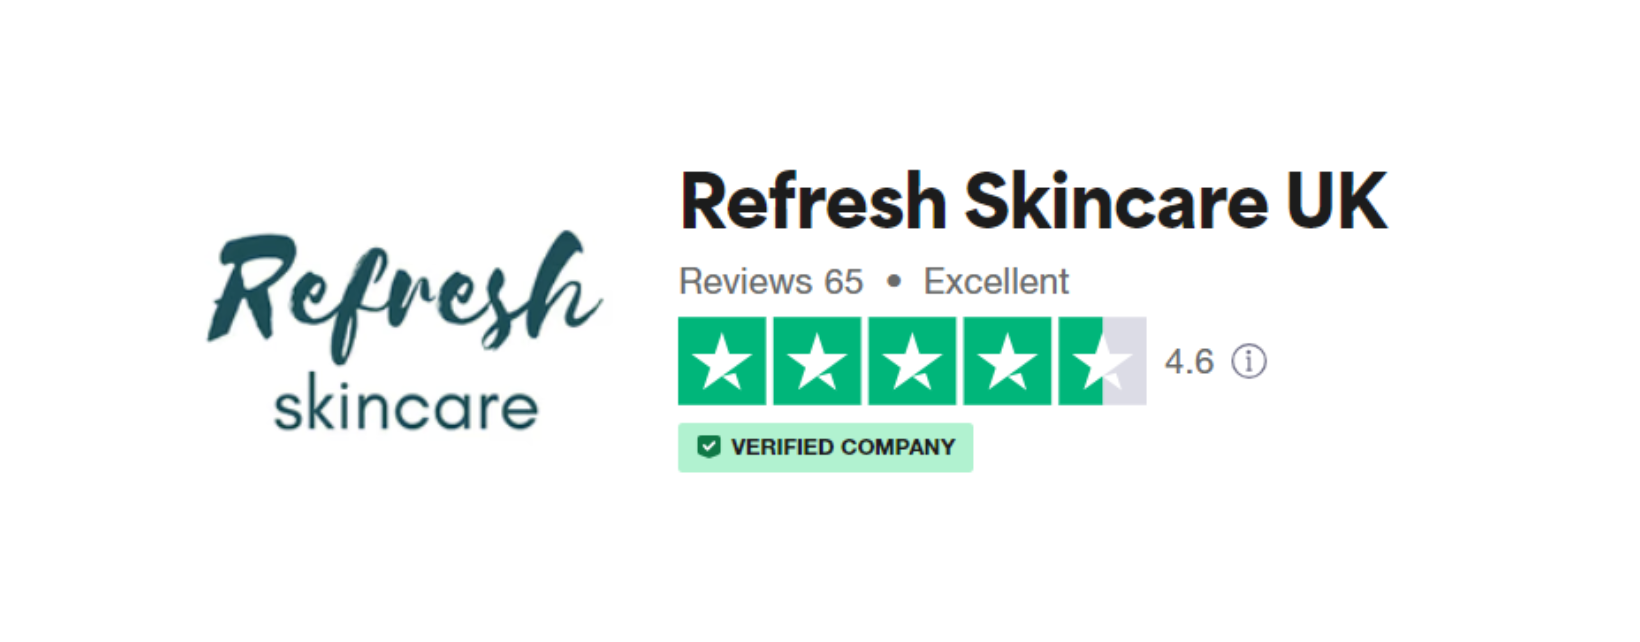 Refresh Skincare Trustpilot Rating